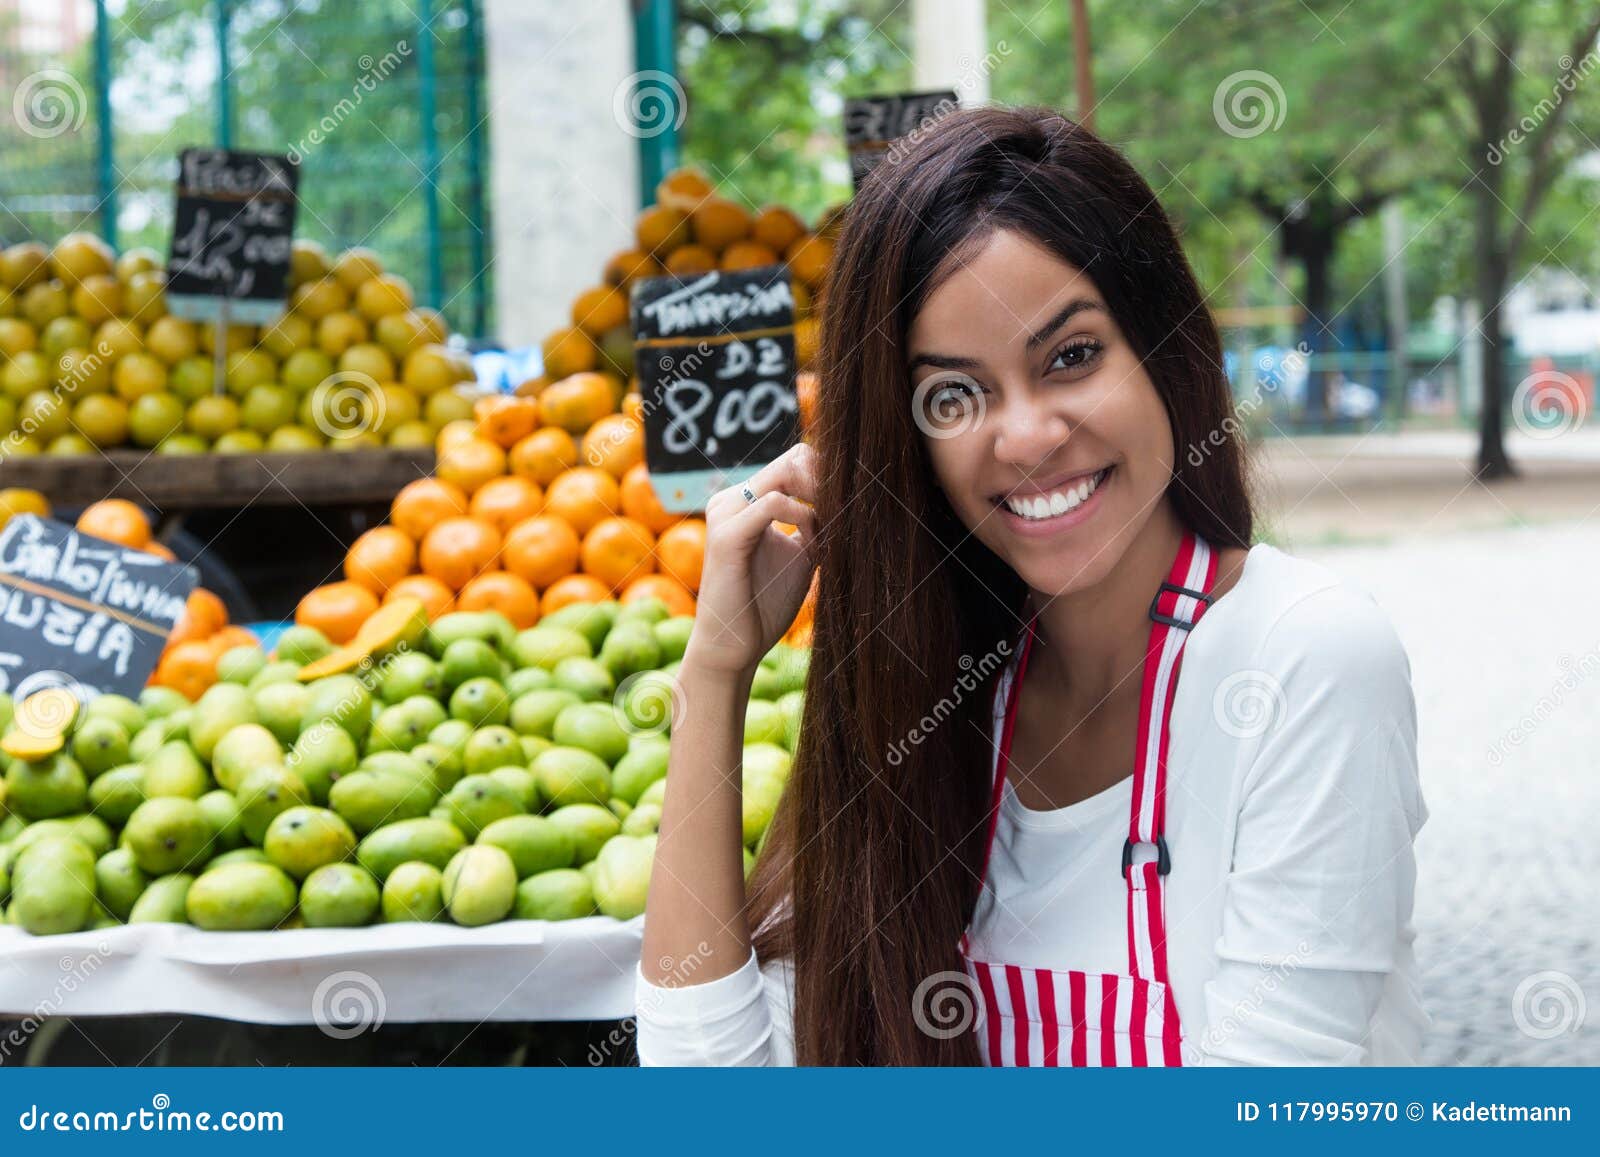 latin american woman selling fruits at farmers market